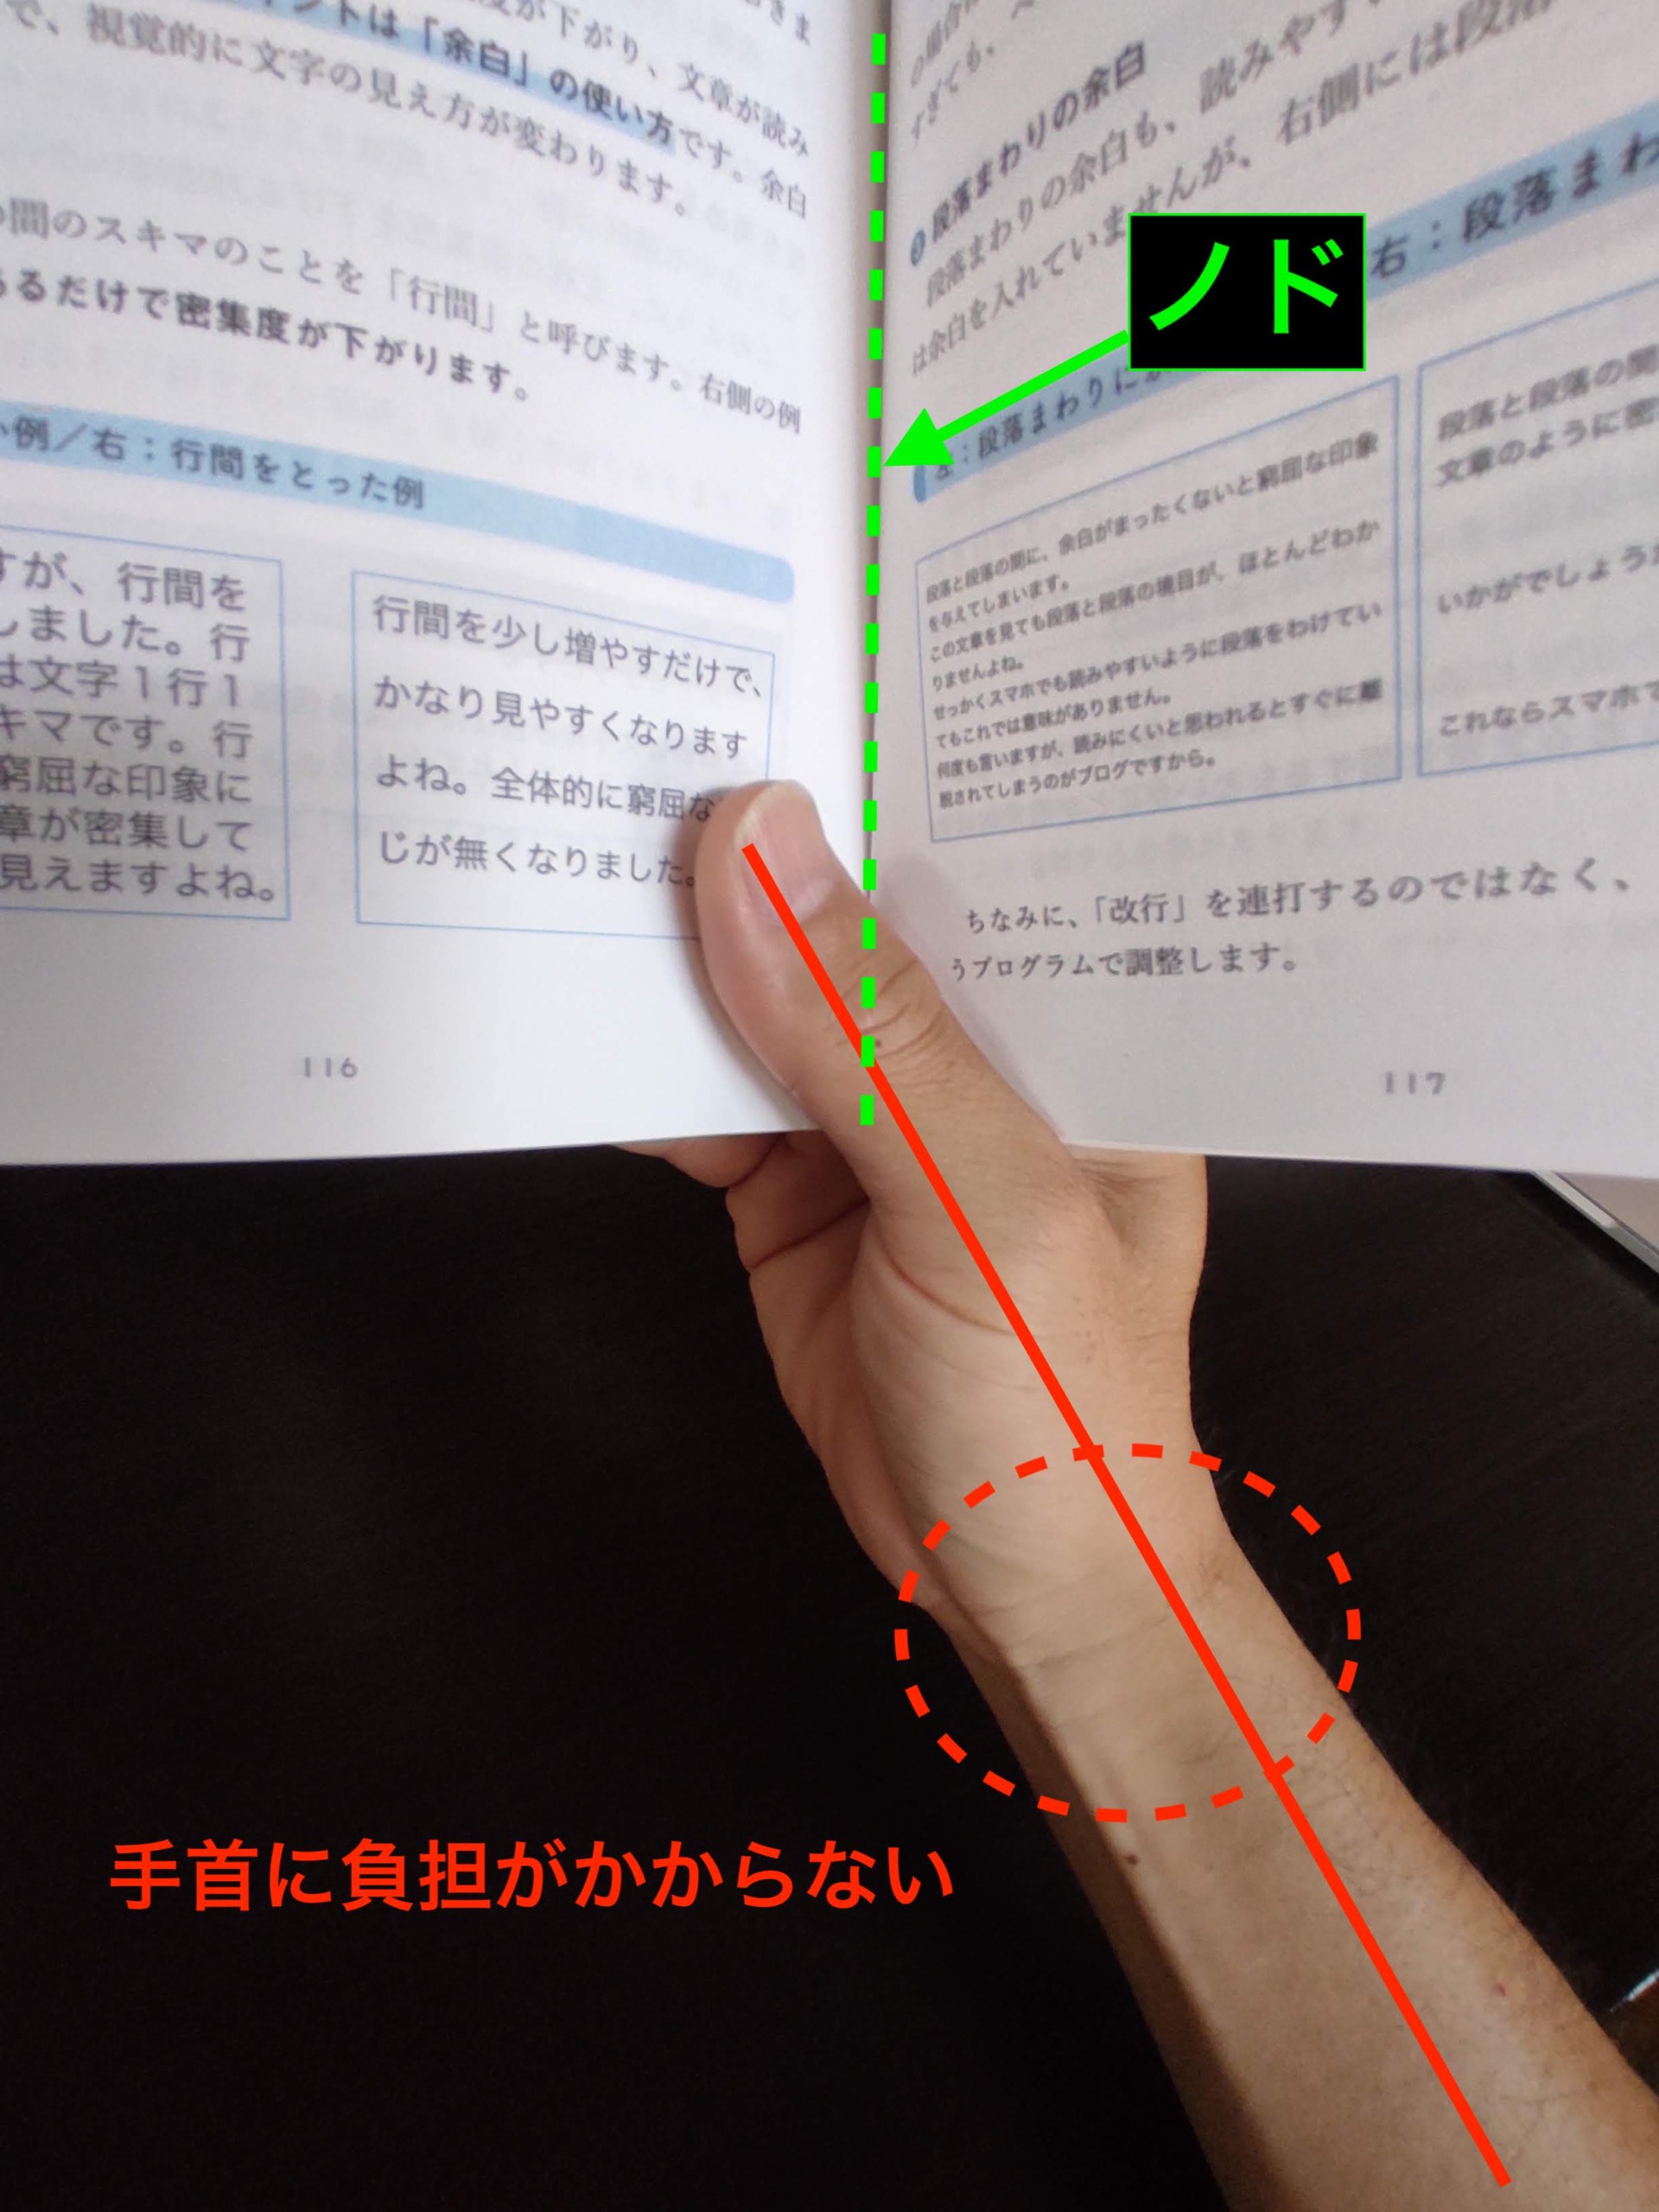 Jin式親指しおりを使ったときの指の位置を説明した画像